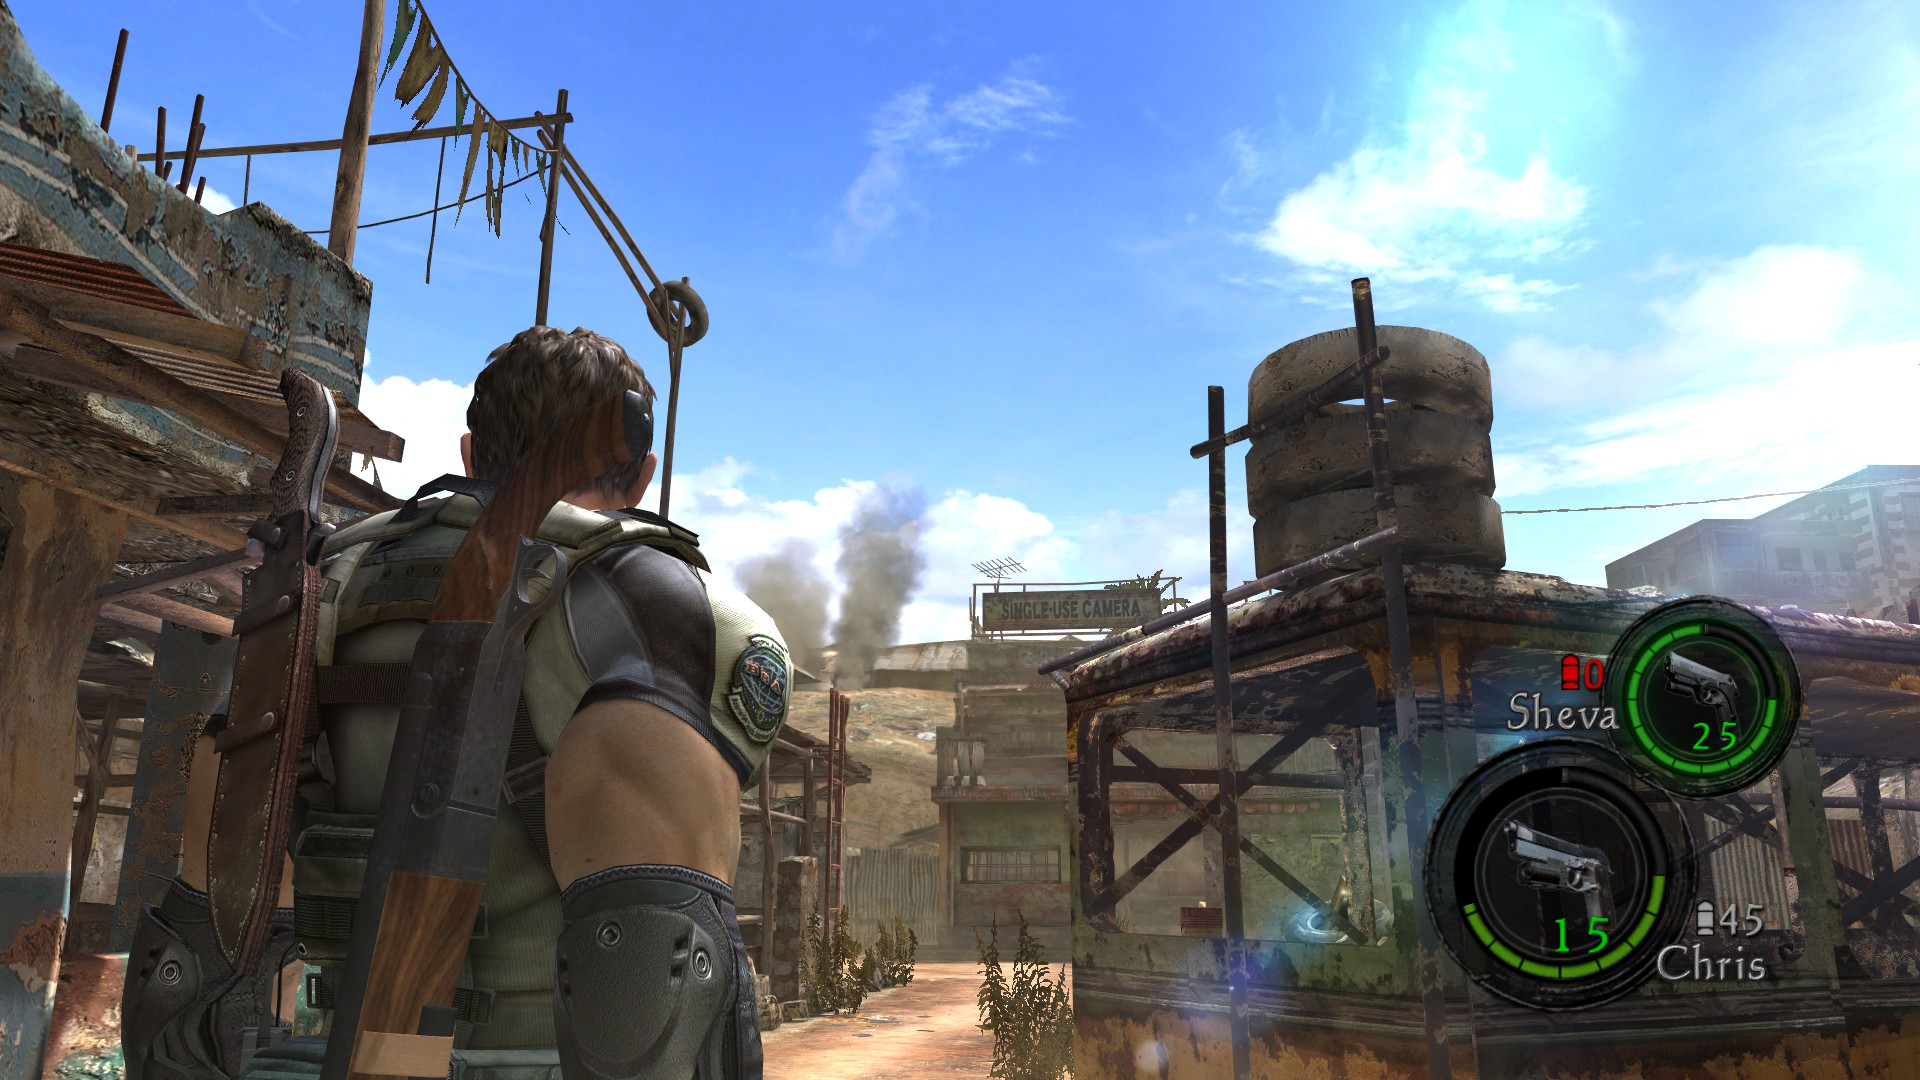 Resident Evil 5 Gameplay (PC) Gameplay Exagear Emulator (Windows) Android,  Wine 6.0 3.5.1 